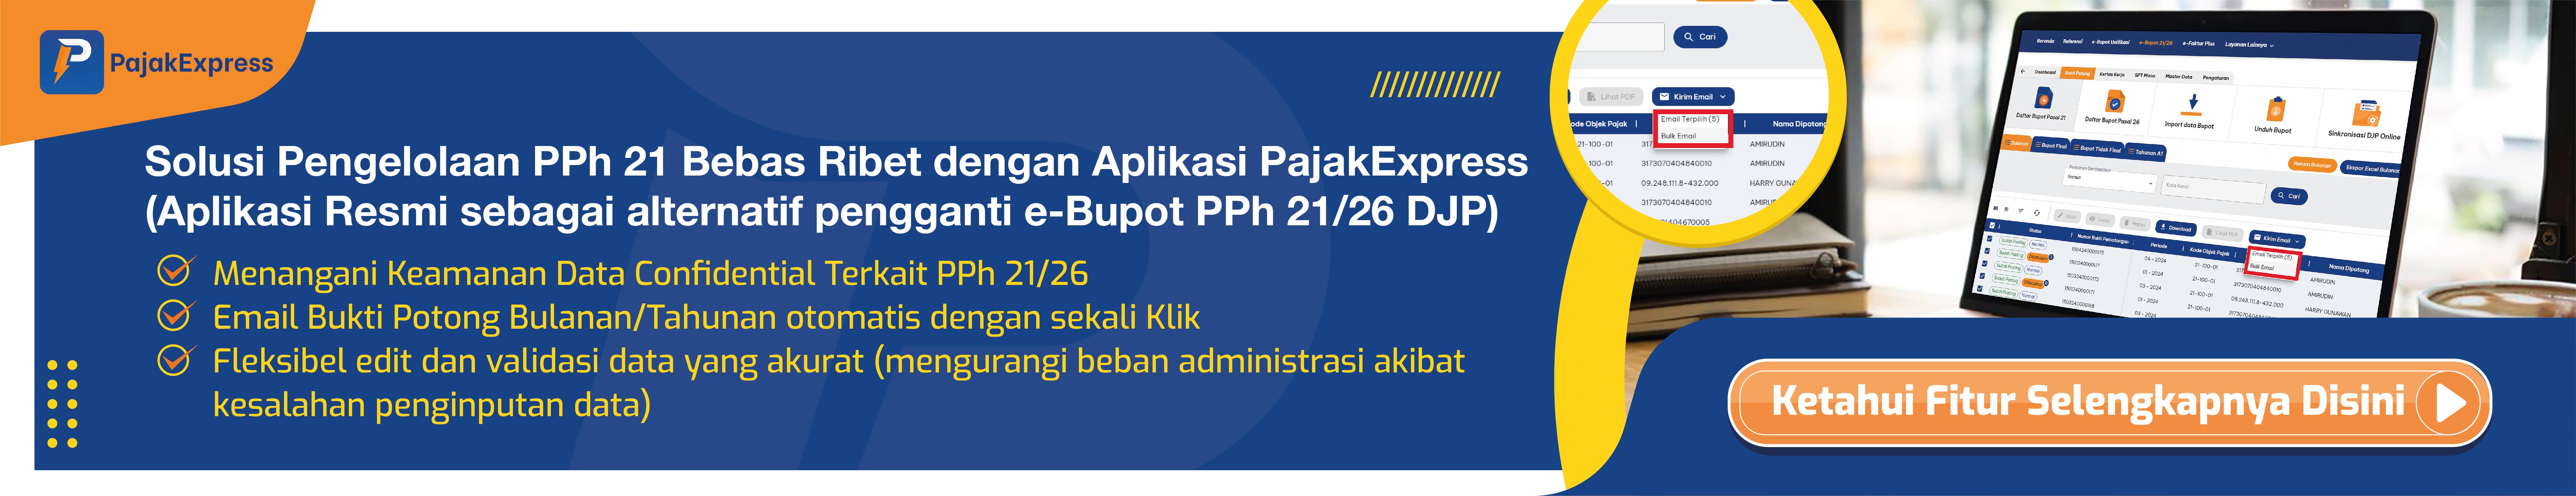 PajakExpress ebupot pph 21 (New)